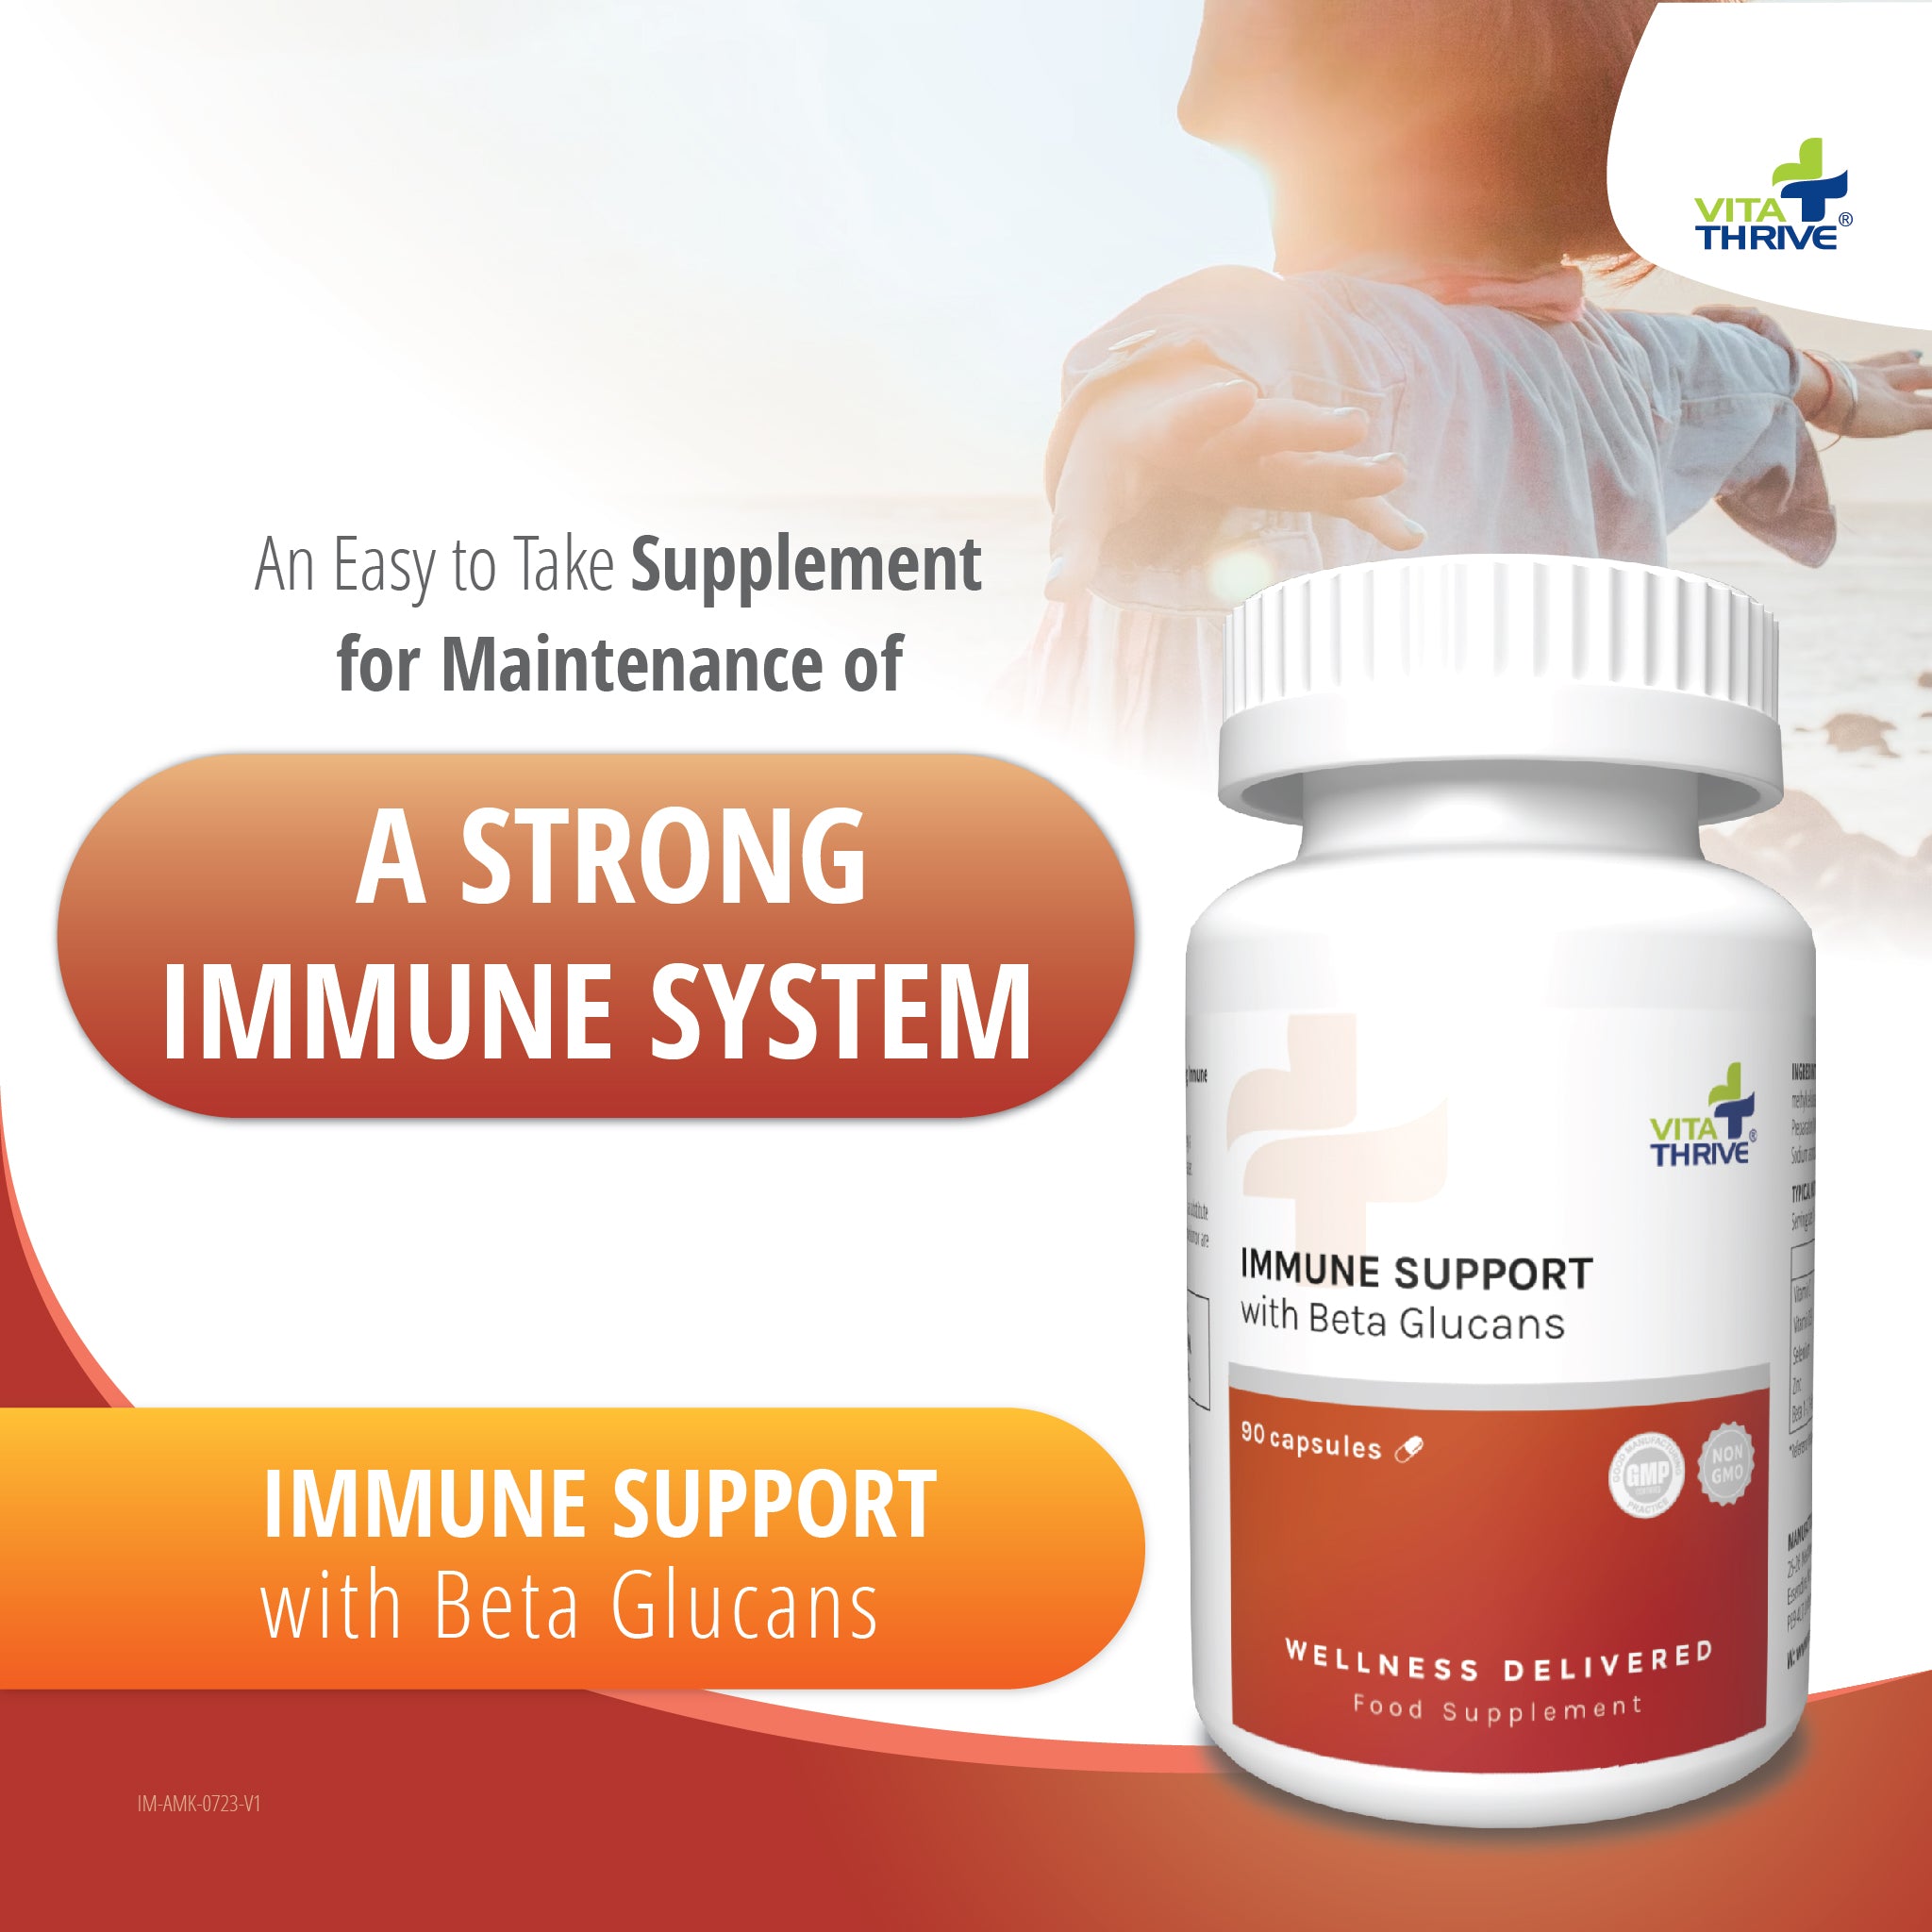 VitaThrive® Immune Support with Beta Glucans - 90 Capsules